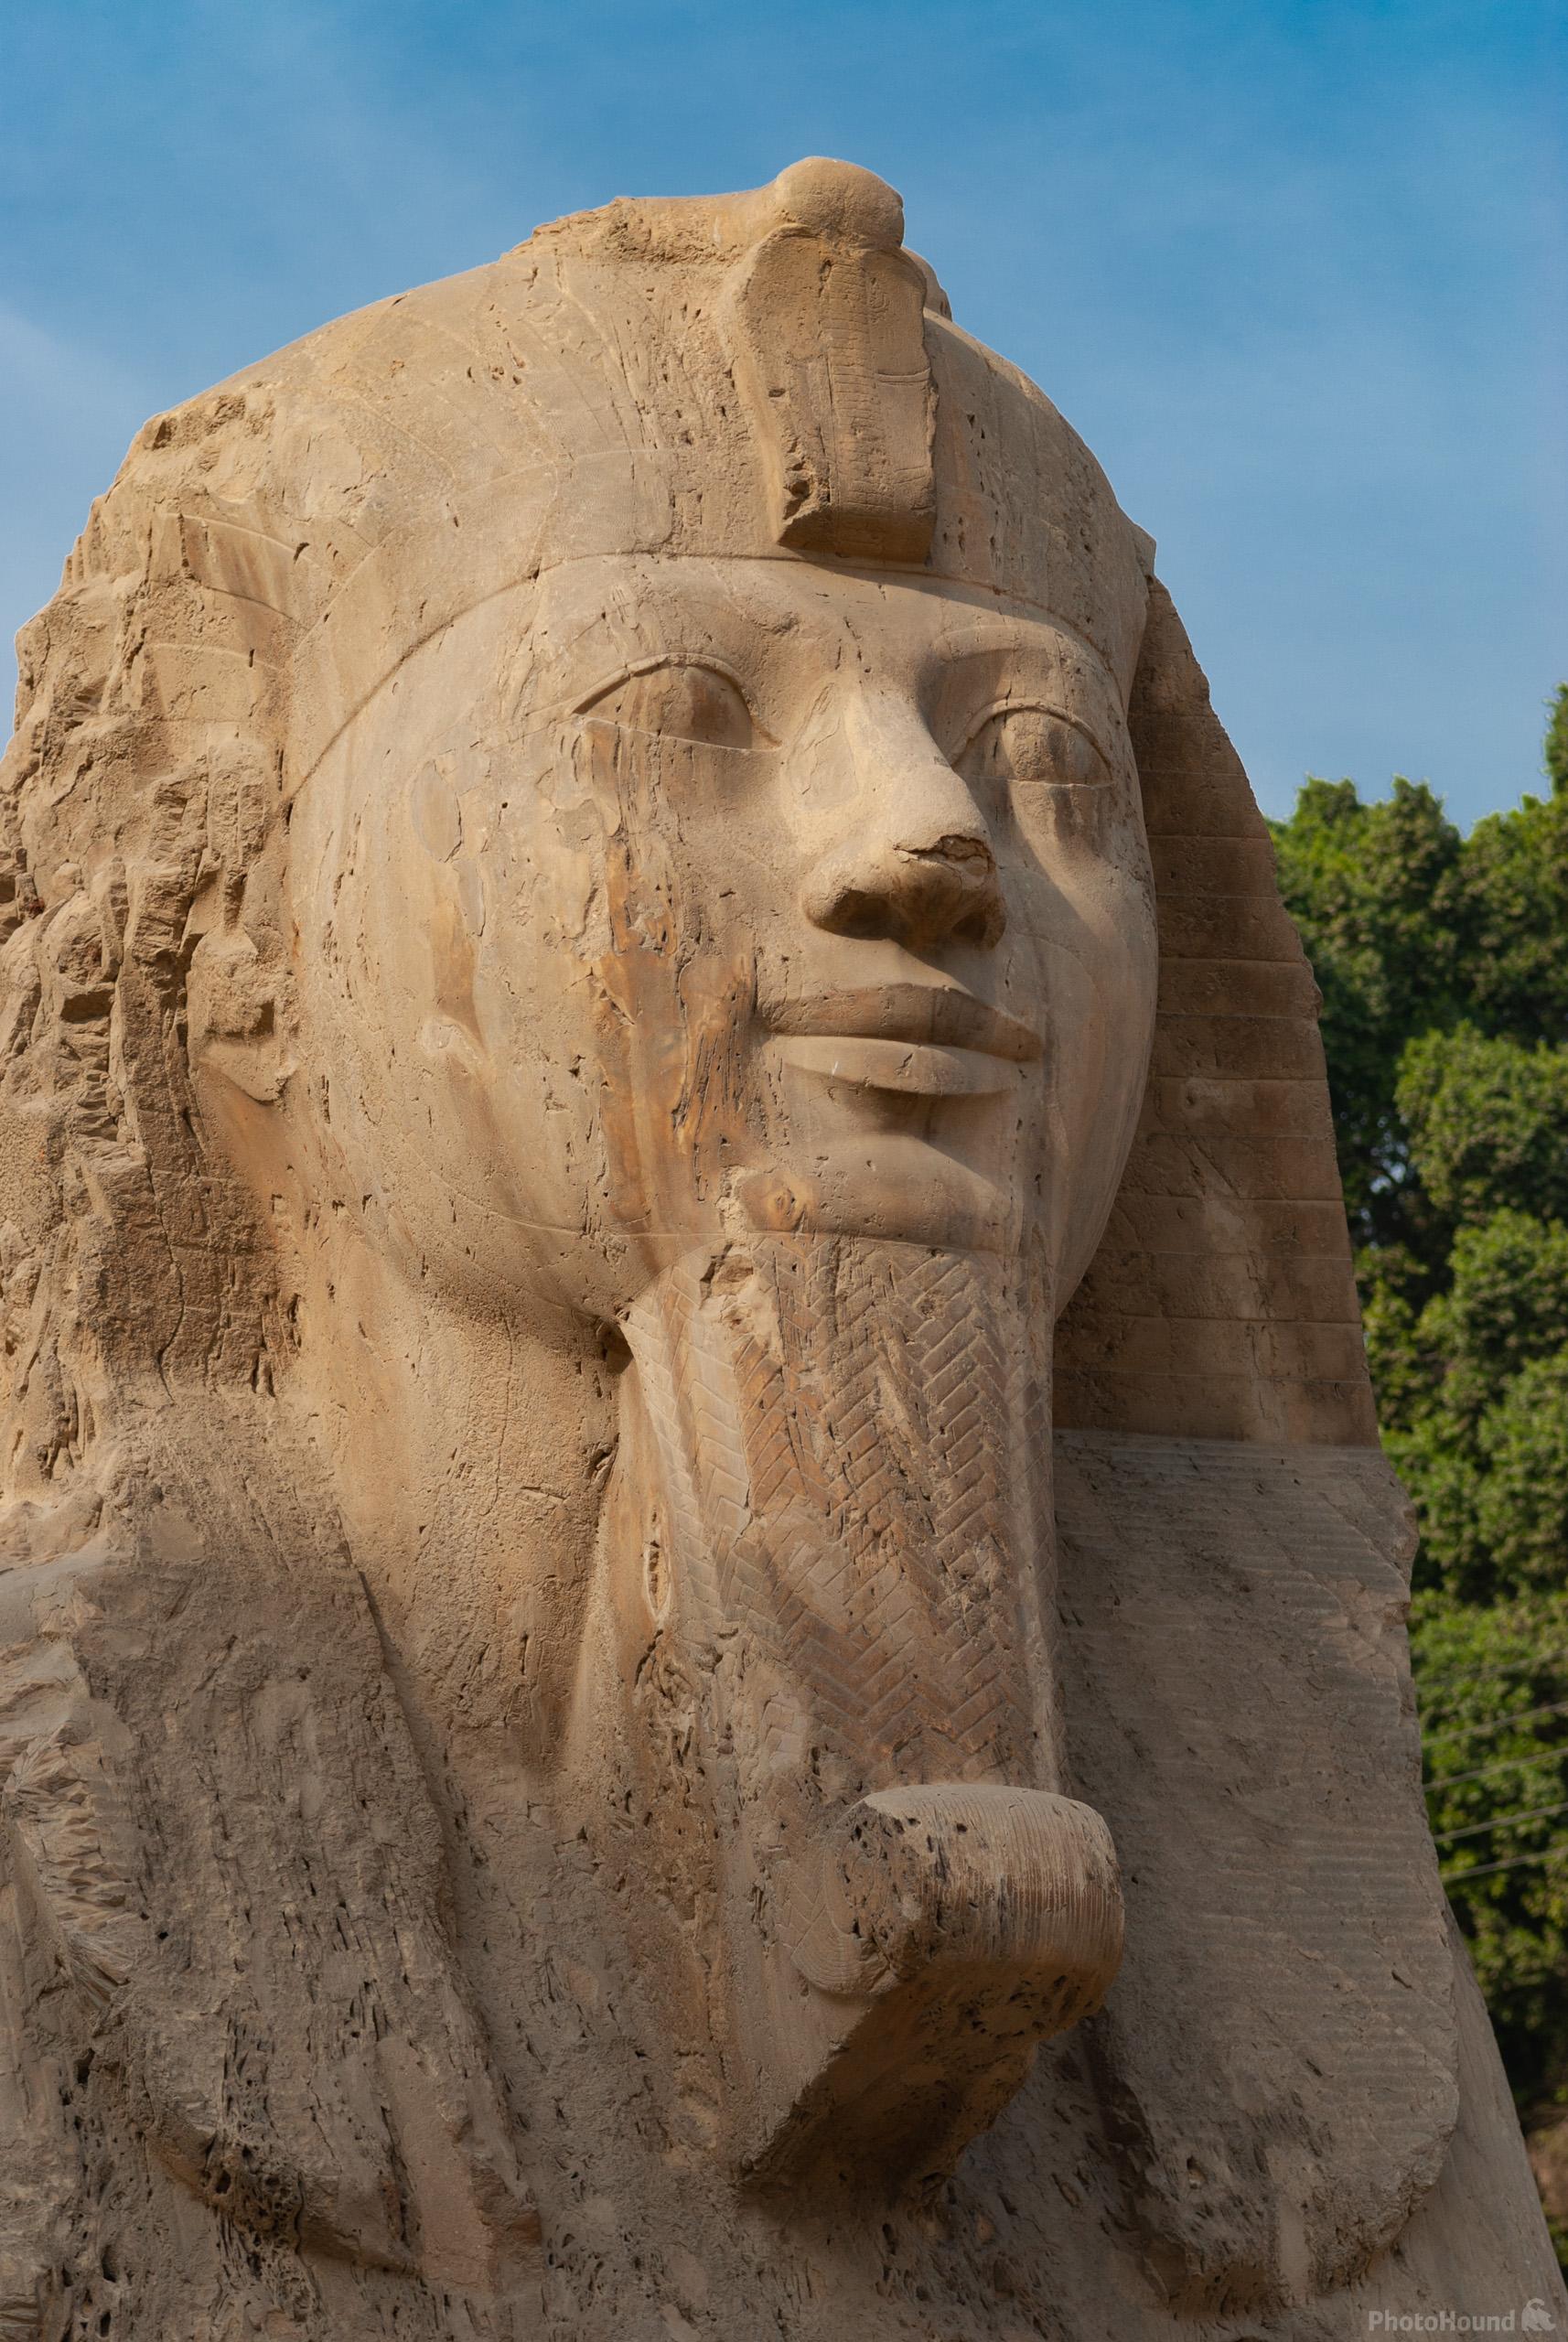 Image of Colossus of Ramses II (Mit Rahina) by Luka Esenko